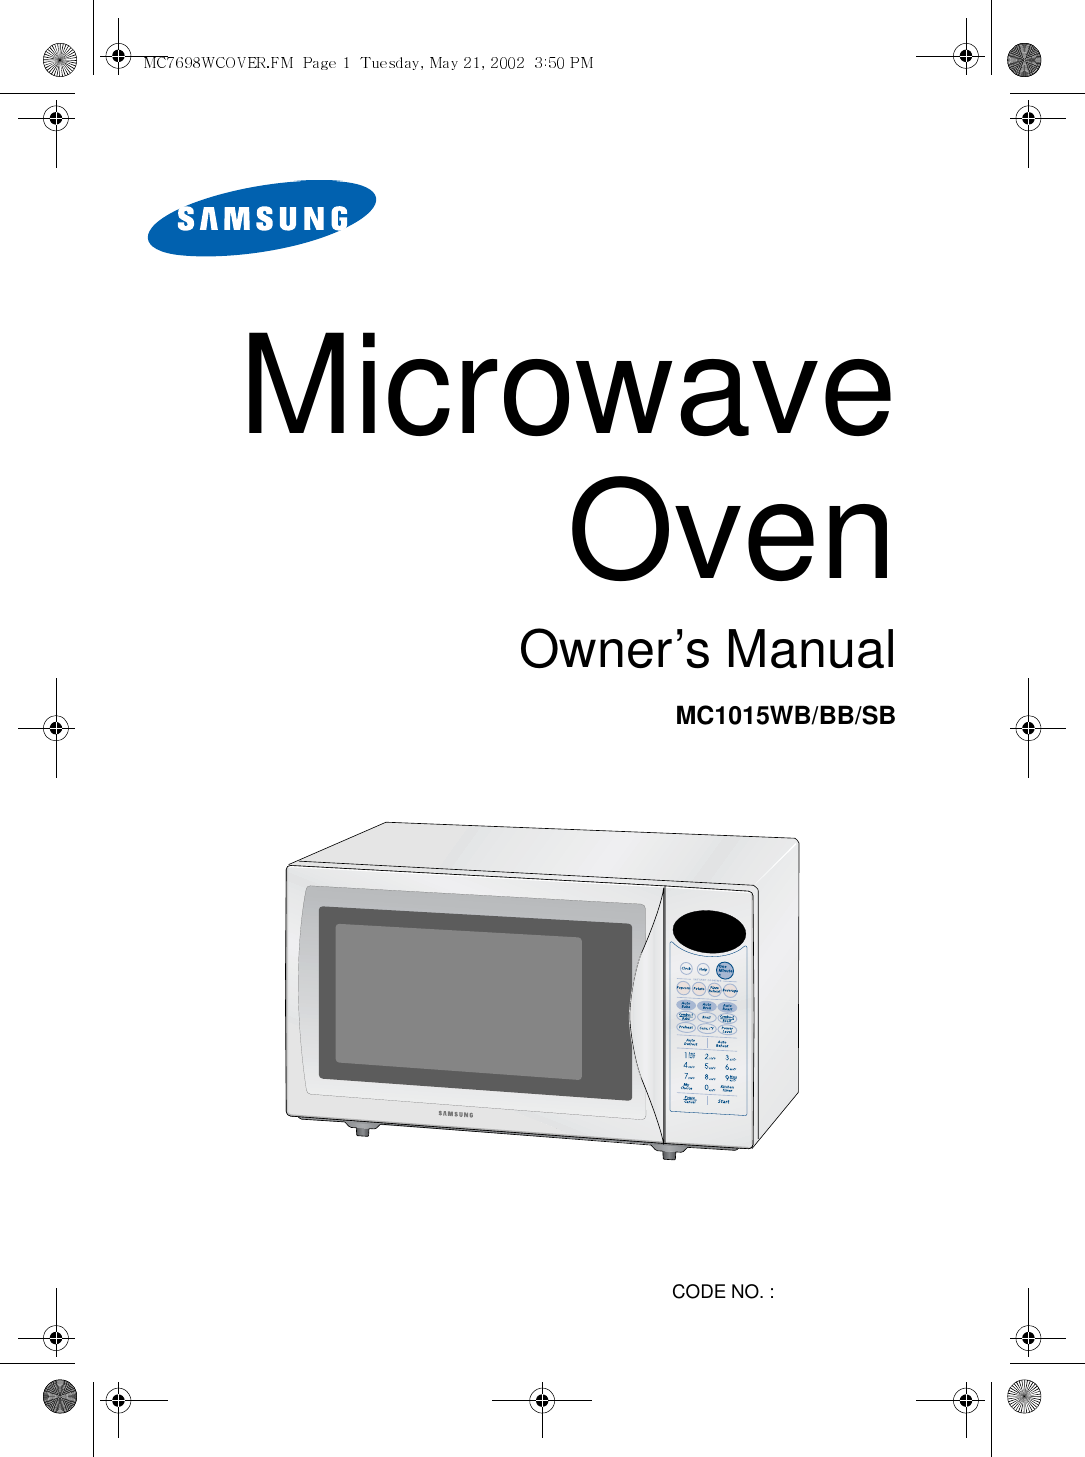 MicrowaveOvenOwner’s ManualMC1015WB/BB/SBCODE NO. : 